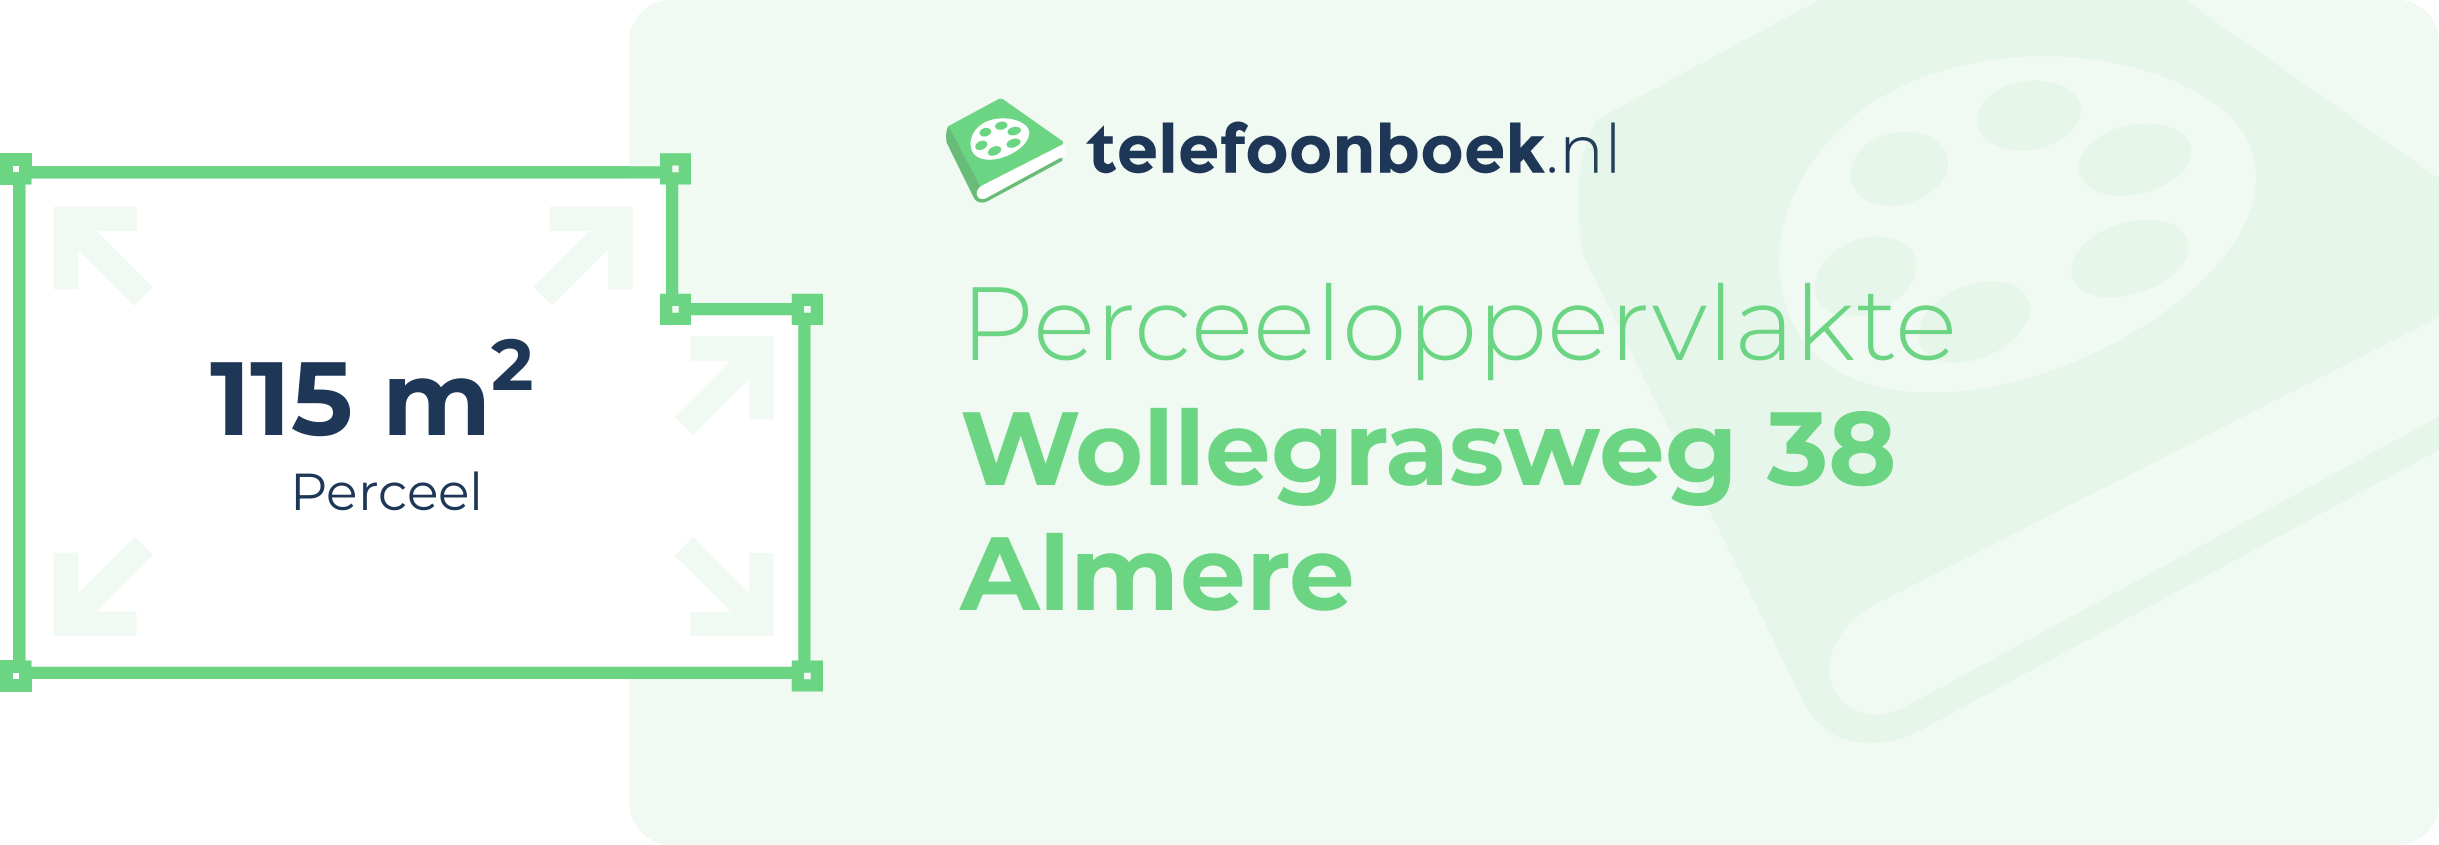 Perceeloppervlakte Wollegrasweg 38 Almere